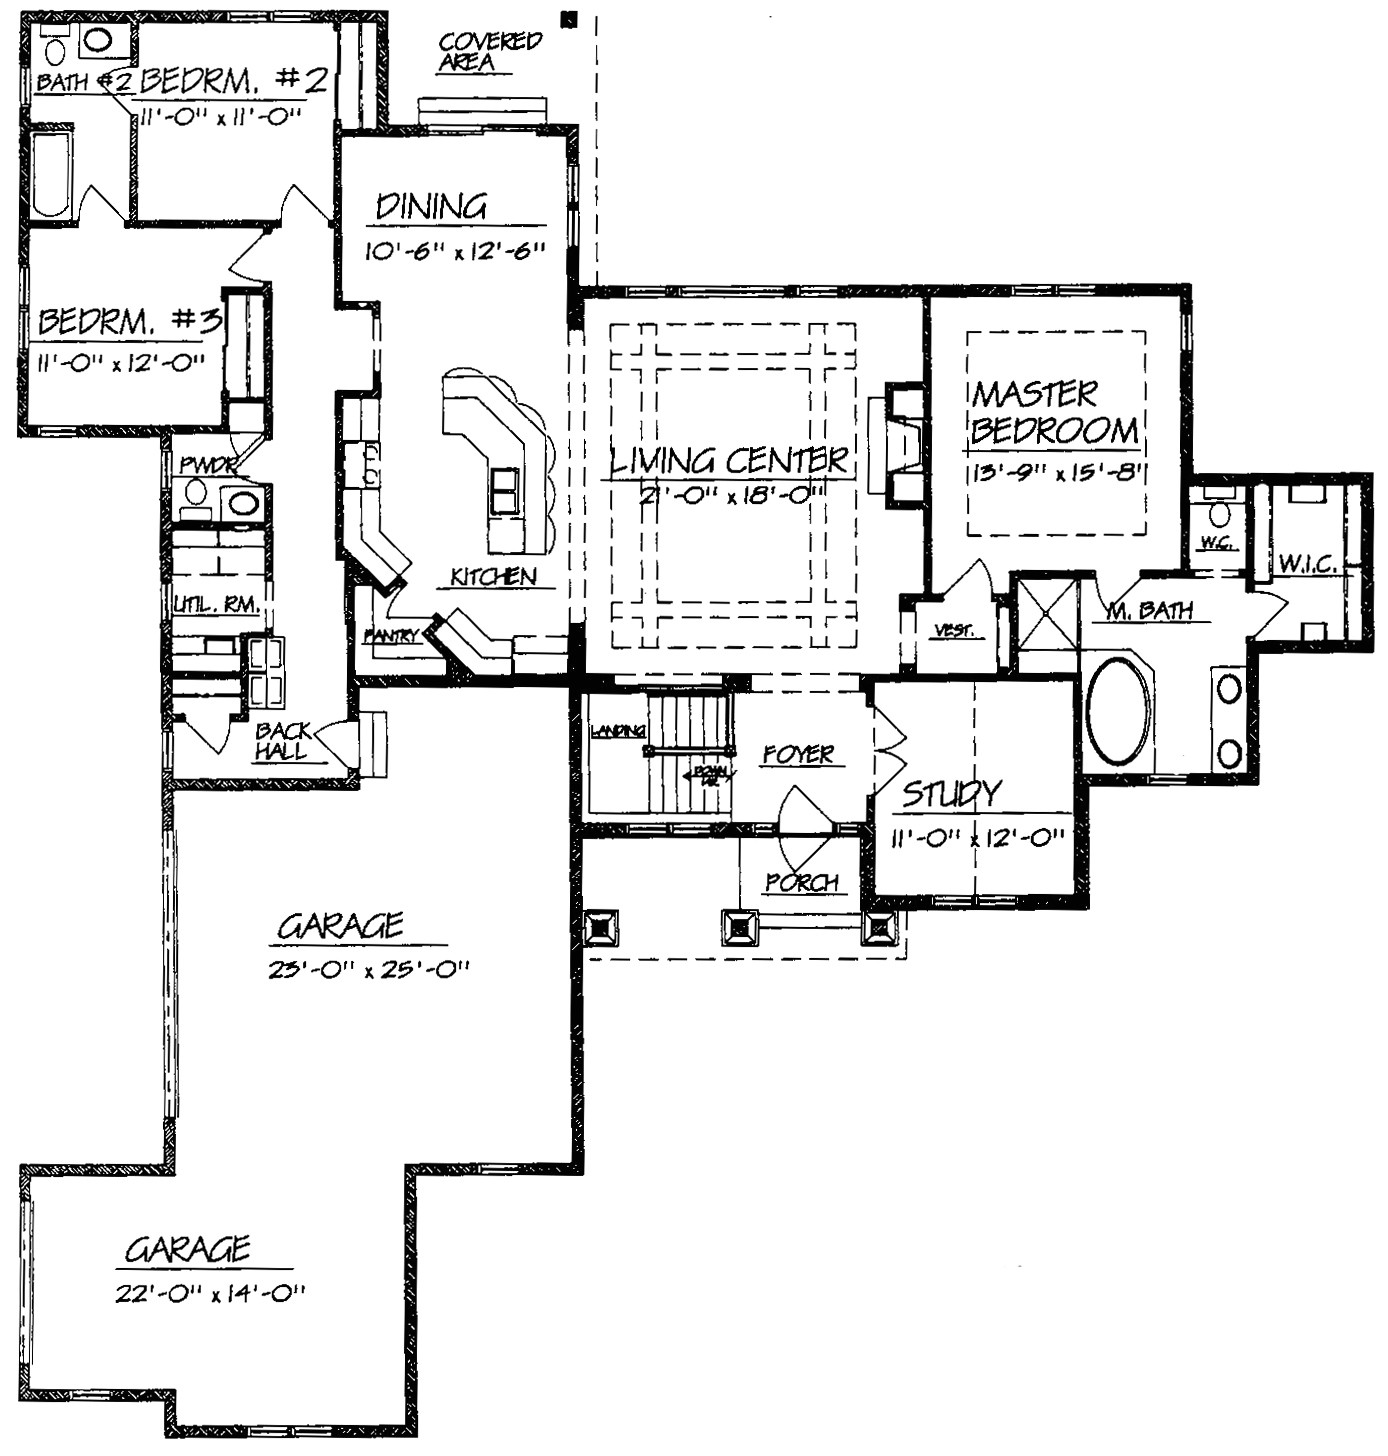 split level floor plans best of new split level house plans with walkout basement home design new